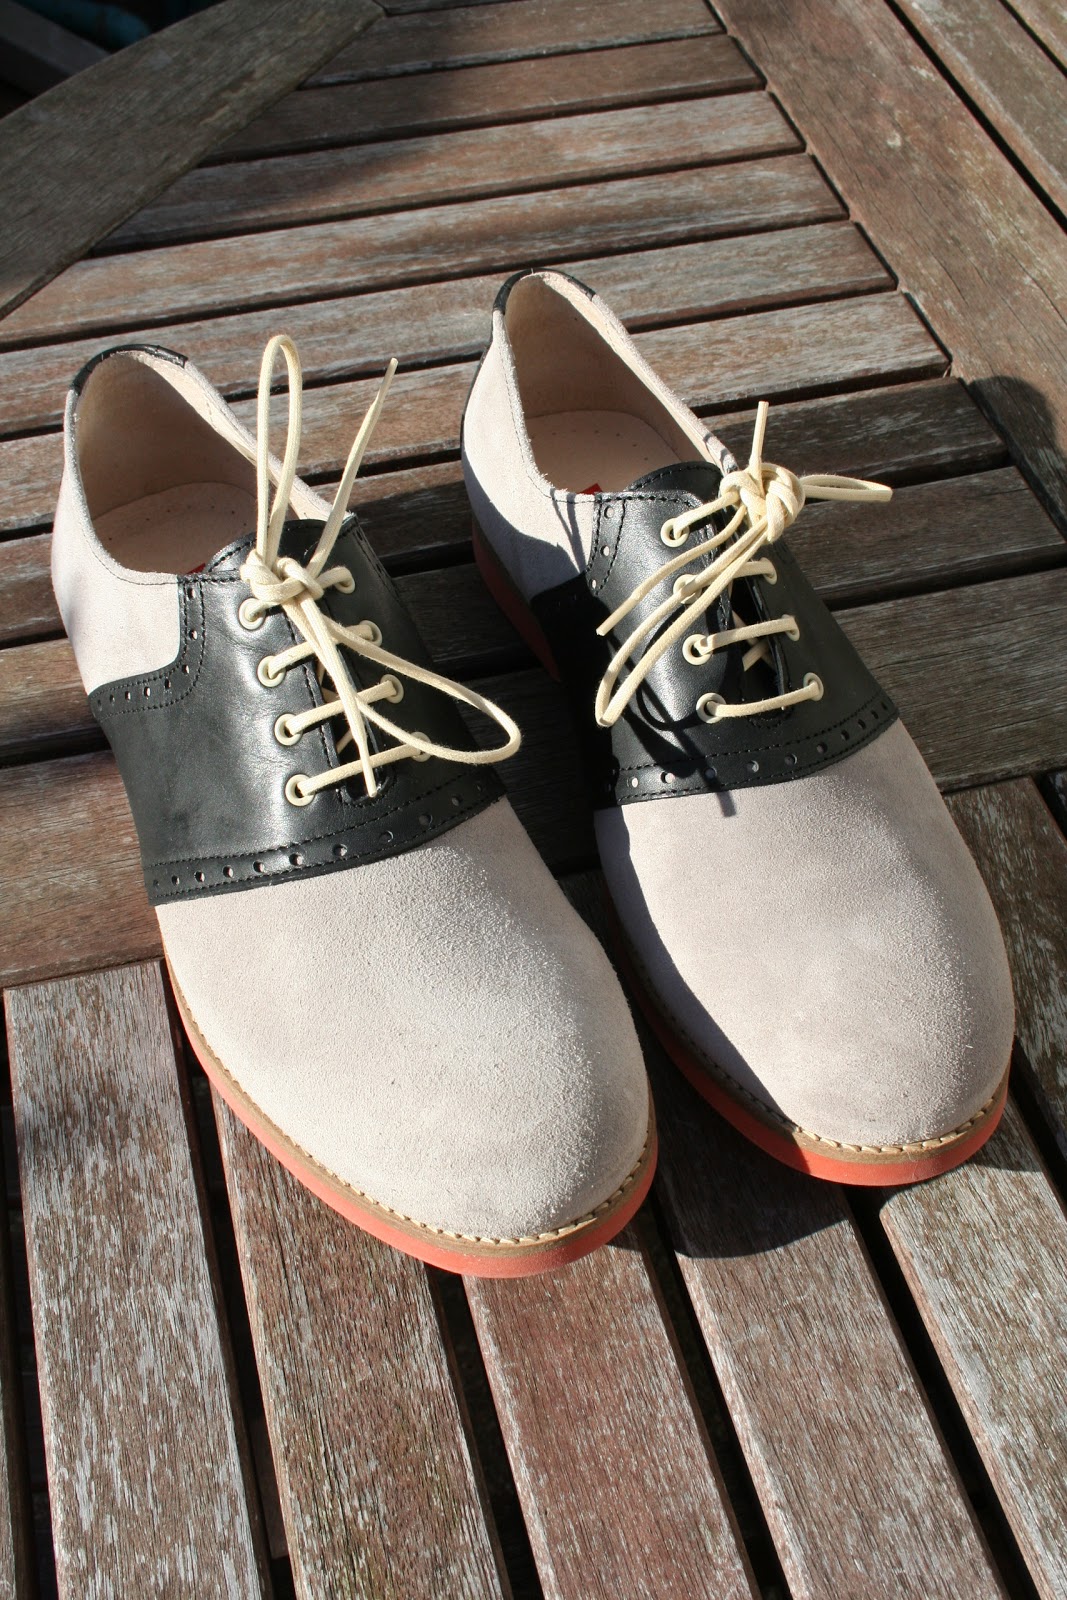 Buckets & Spades - Men's Fashion, Design and Lifestyle Blog: Saddle Shoes